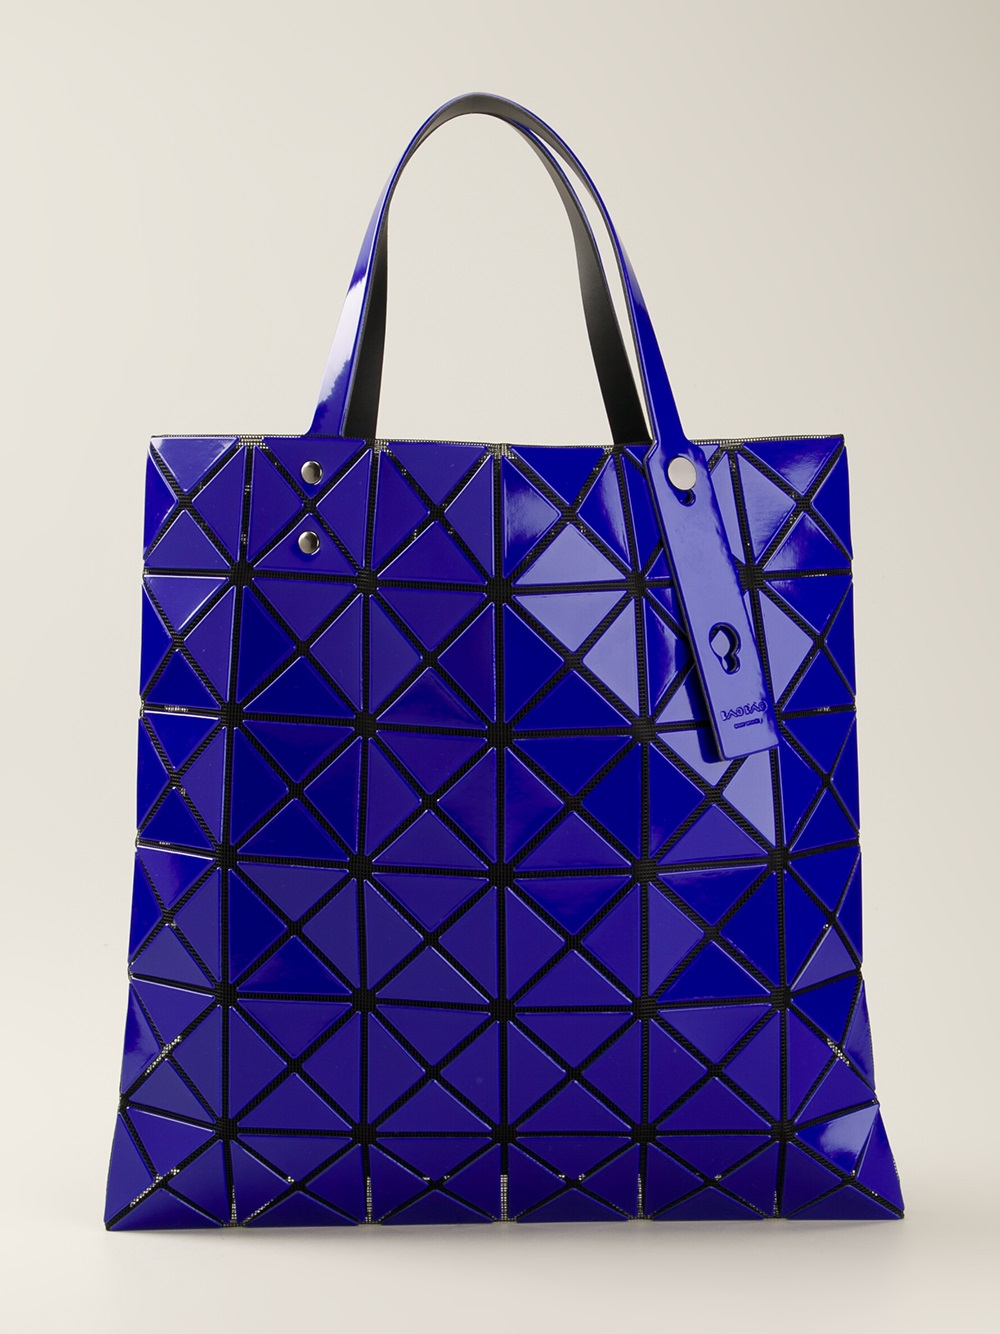 Lyst - Bao Bao Issey Miyake Geometric Panel Tote Bag in Blue